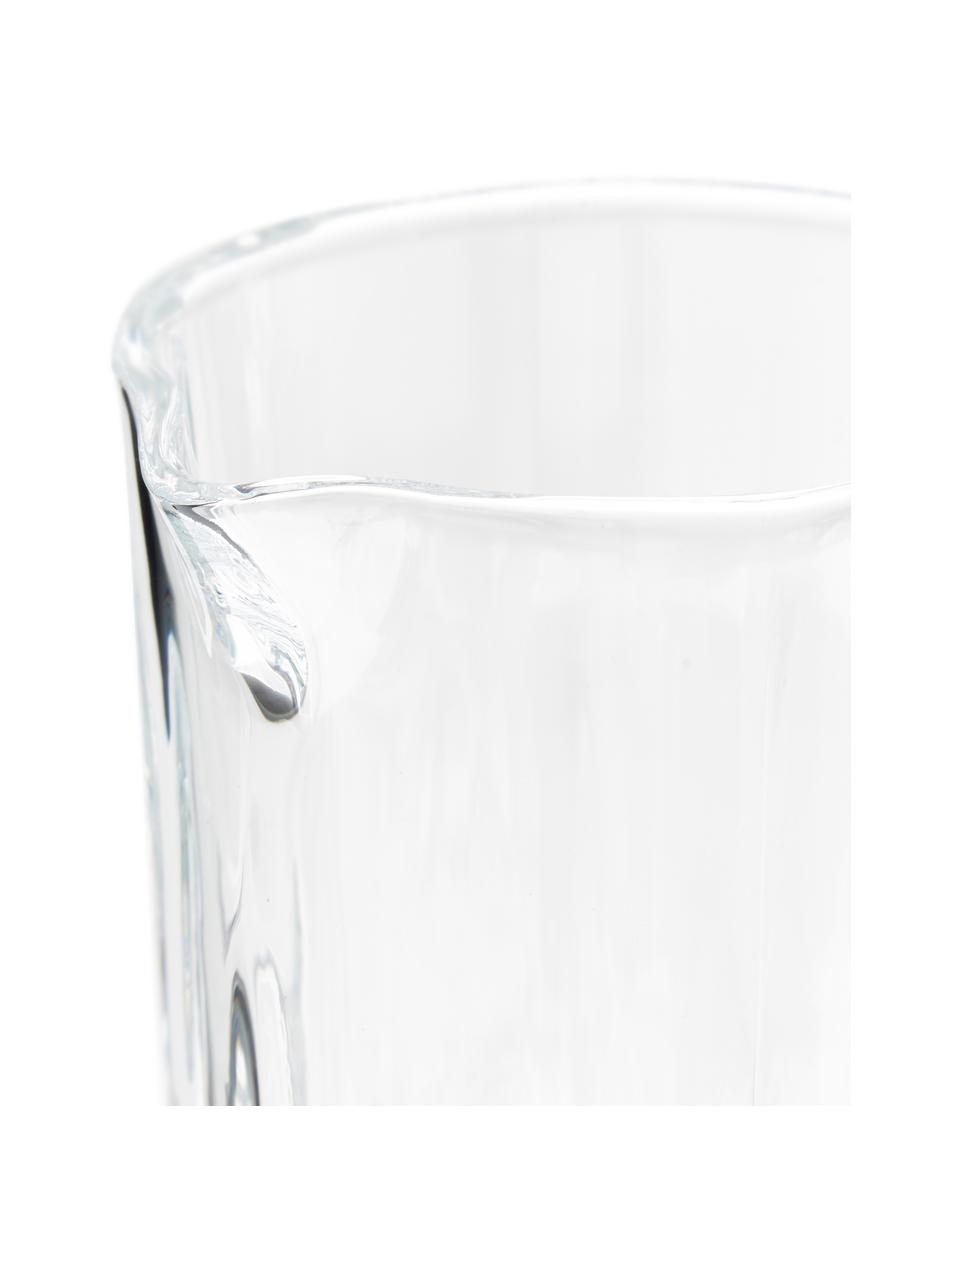 Kristall-Krug Opera mit Relief, 1.2 L, Luxion-Kristallglas, Transparent, H 23 cm, 1.2 L